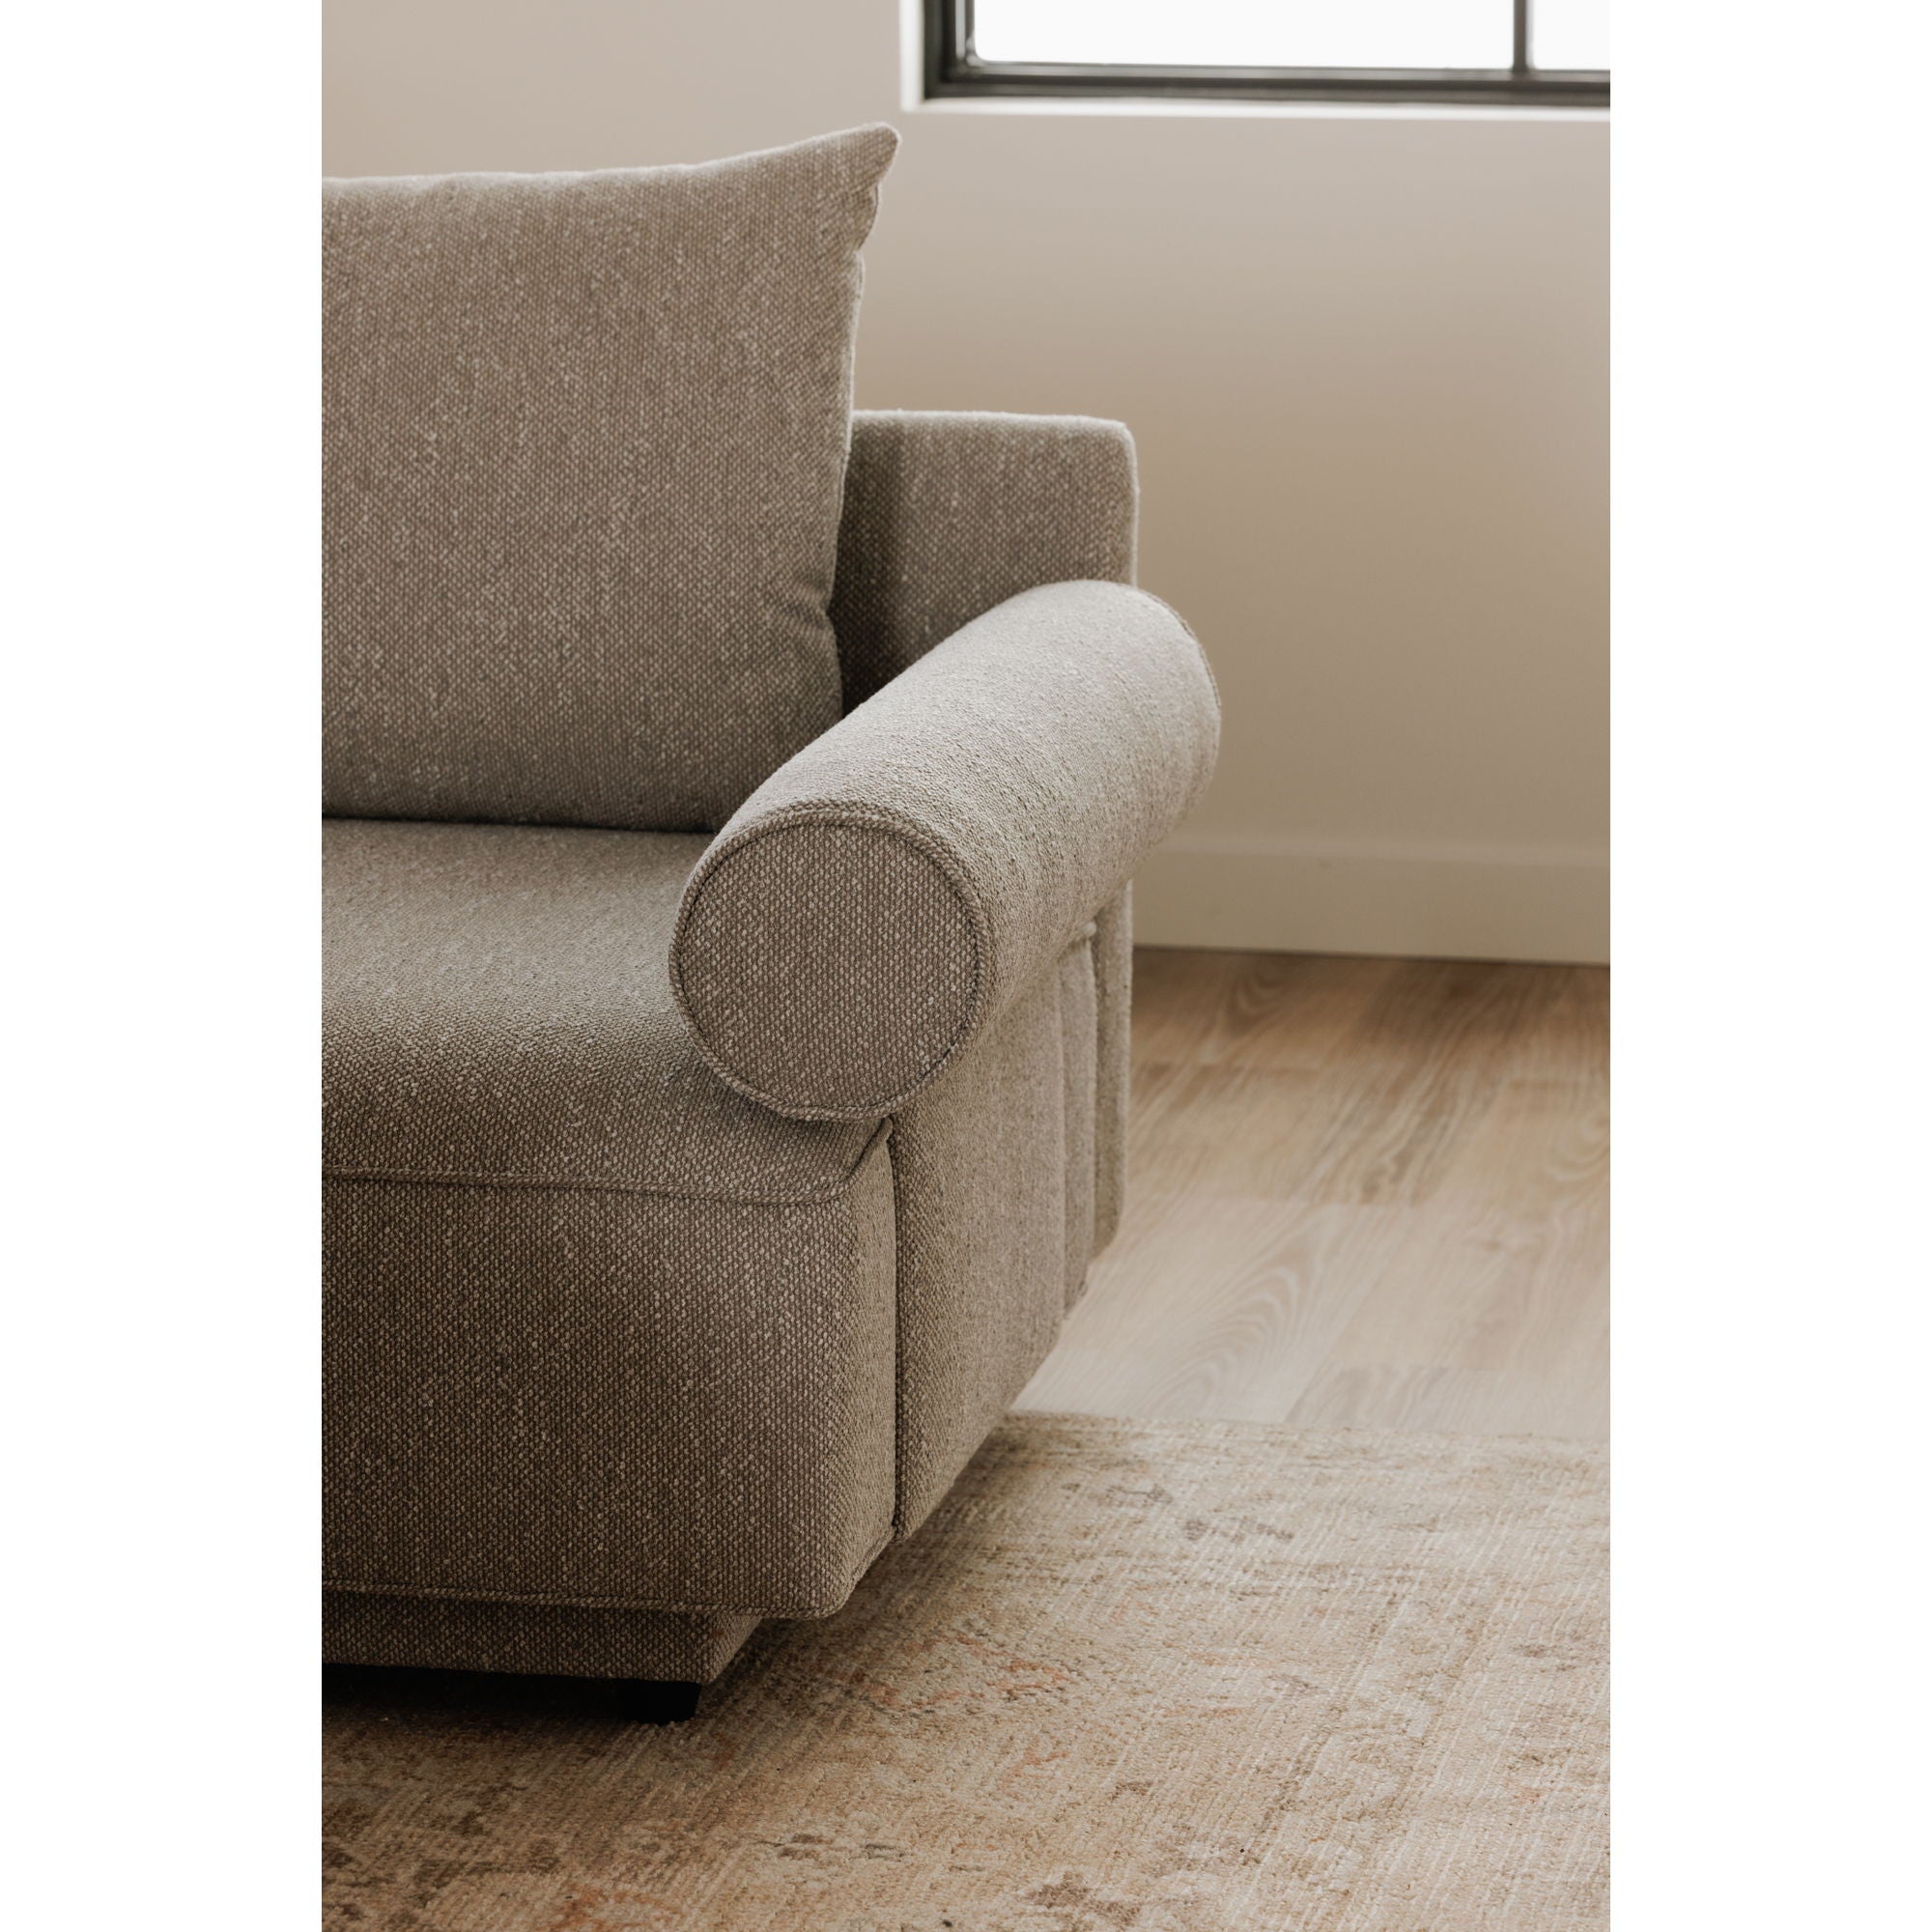 Rosello - Left Arm Facing Chair - Light Grey